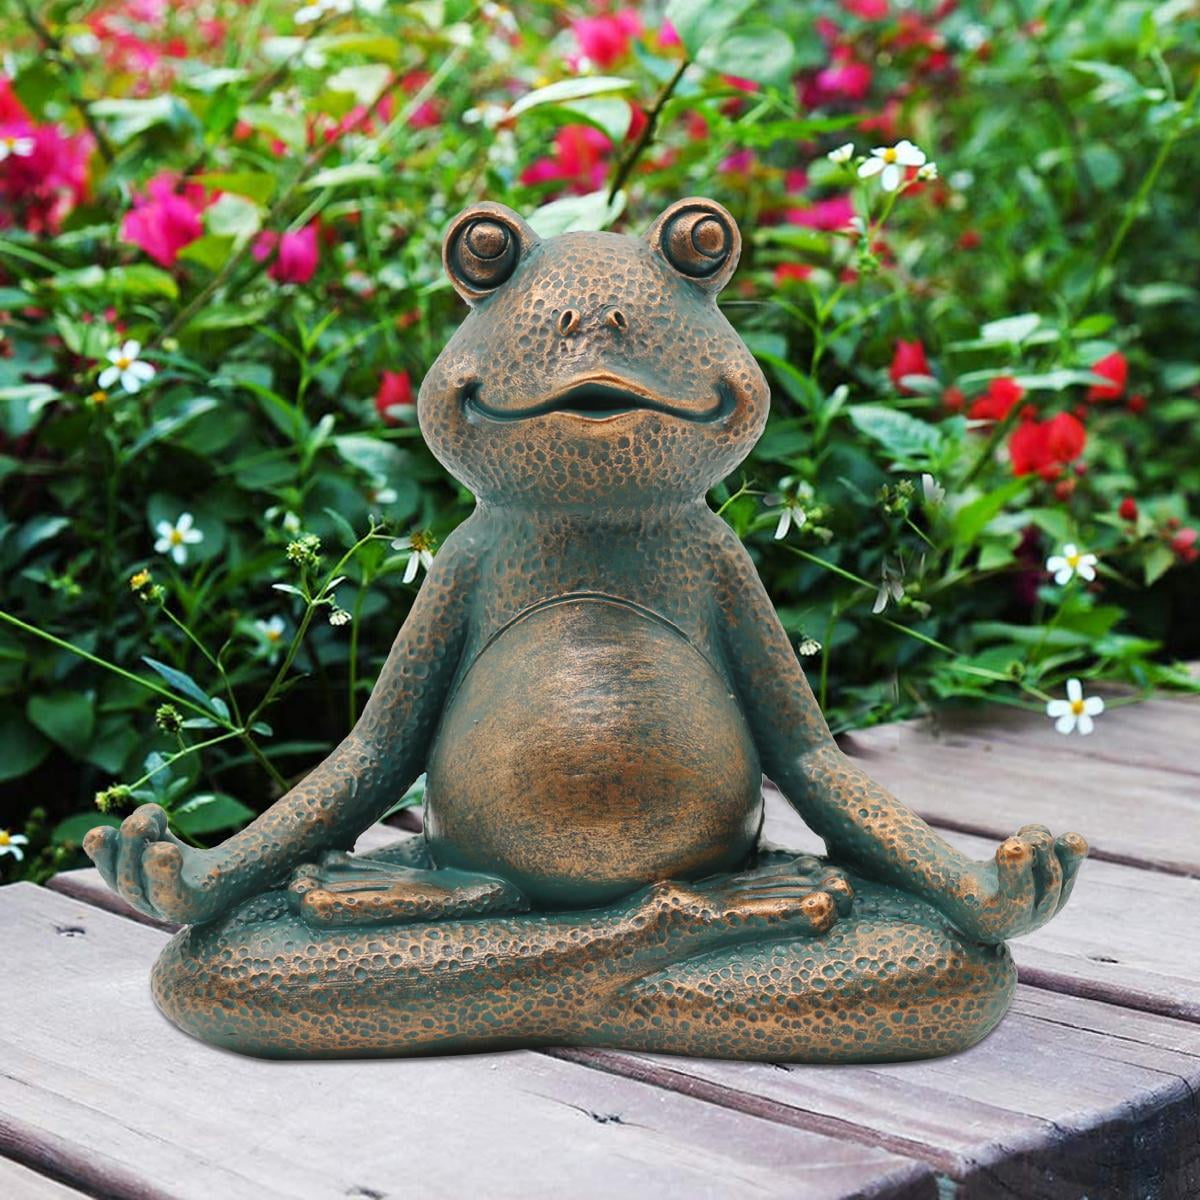 Goodeco Meditating Frog Miniature Figurine,Zen Yoga Frog Garden